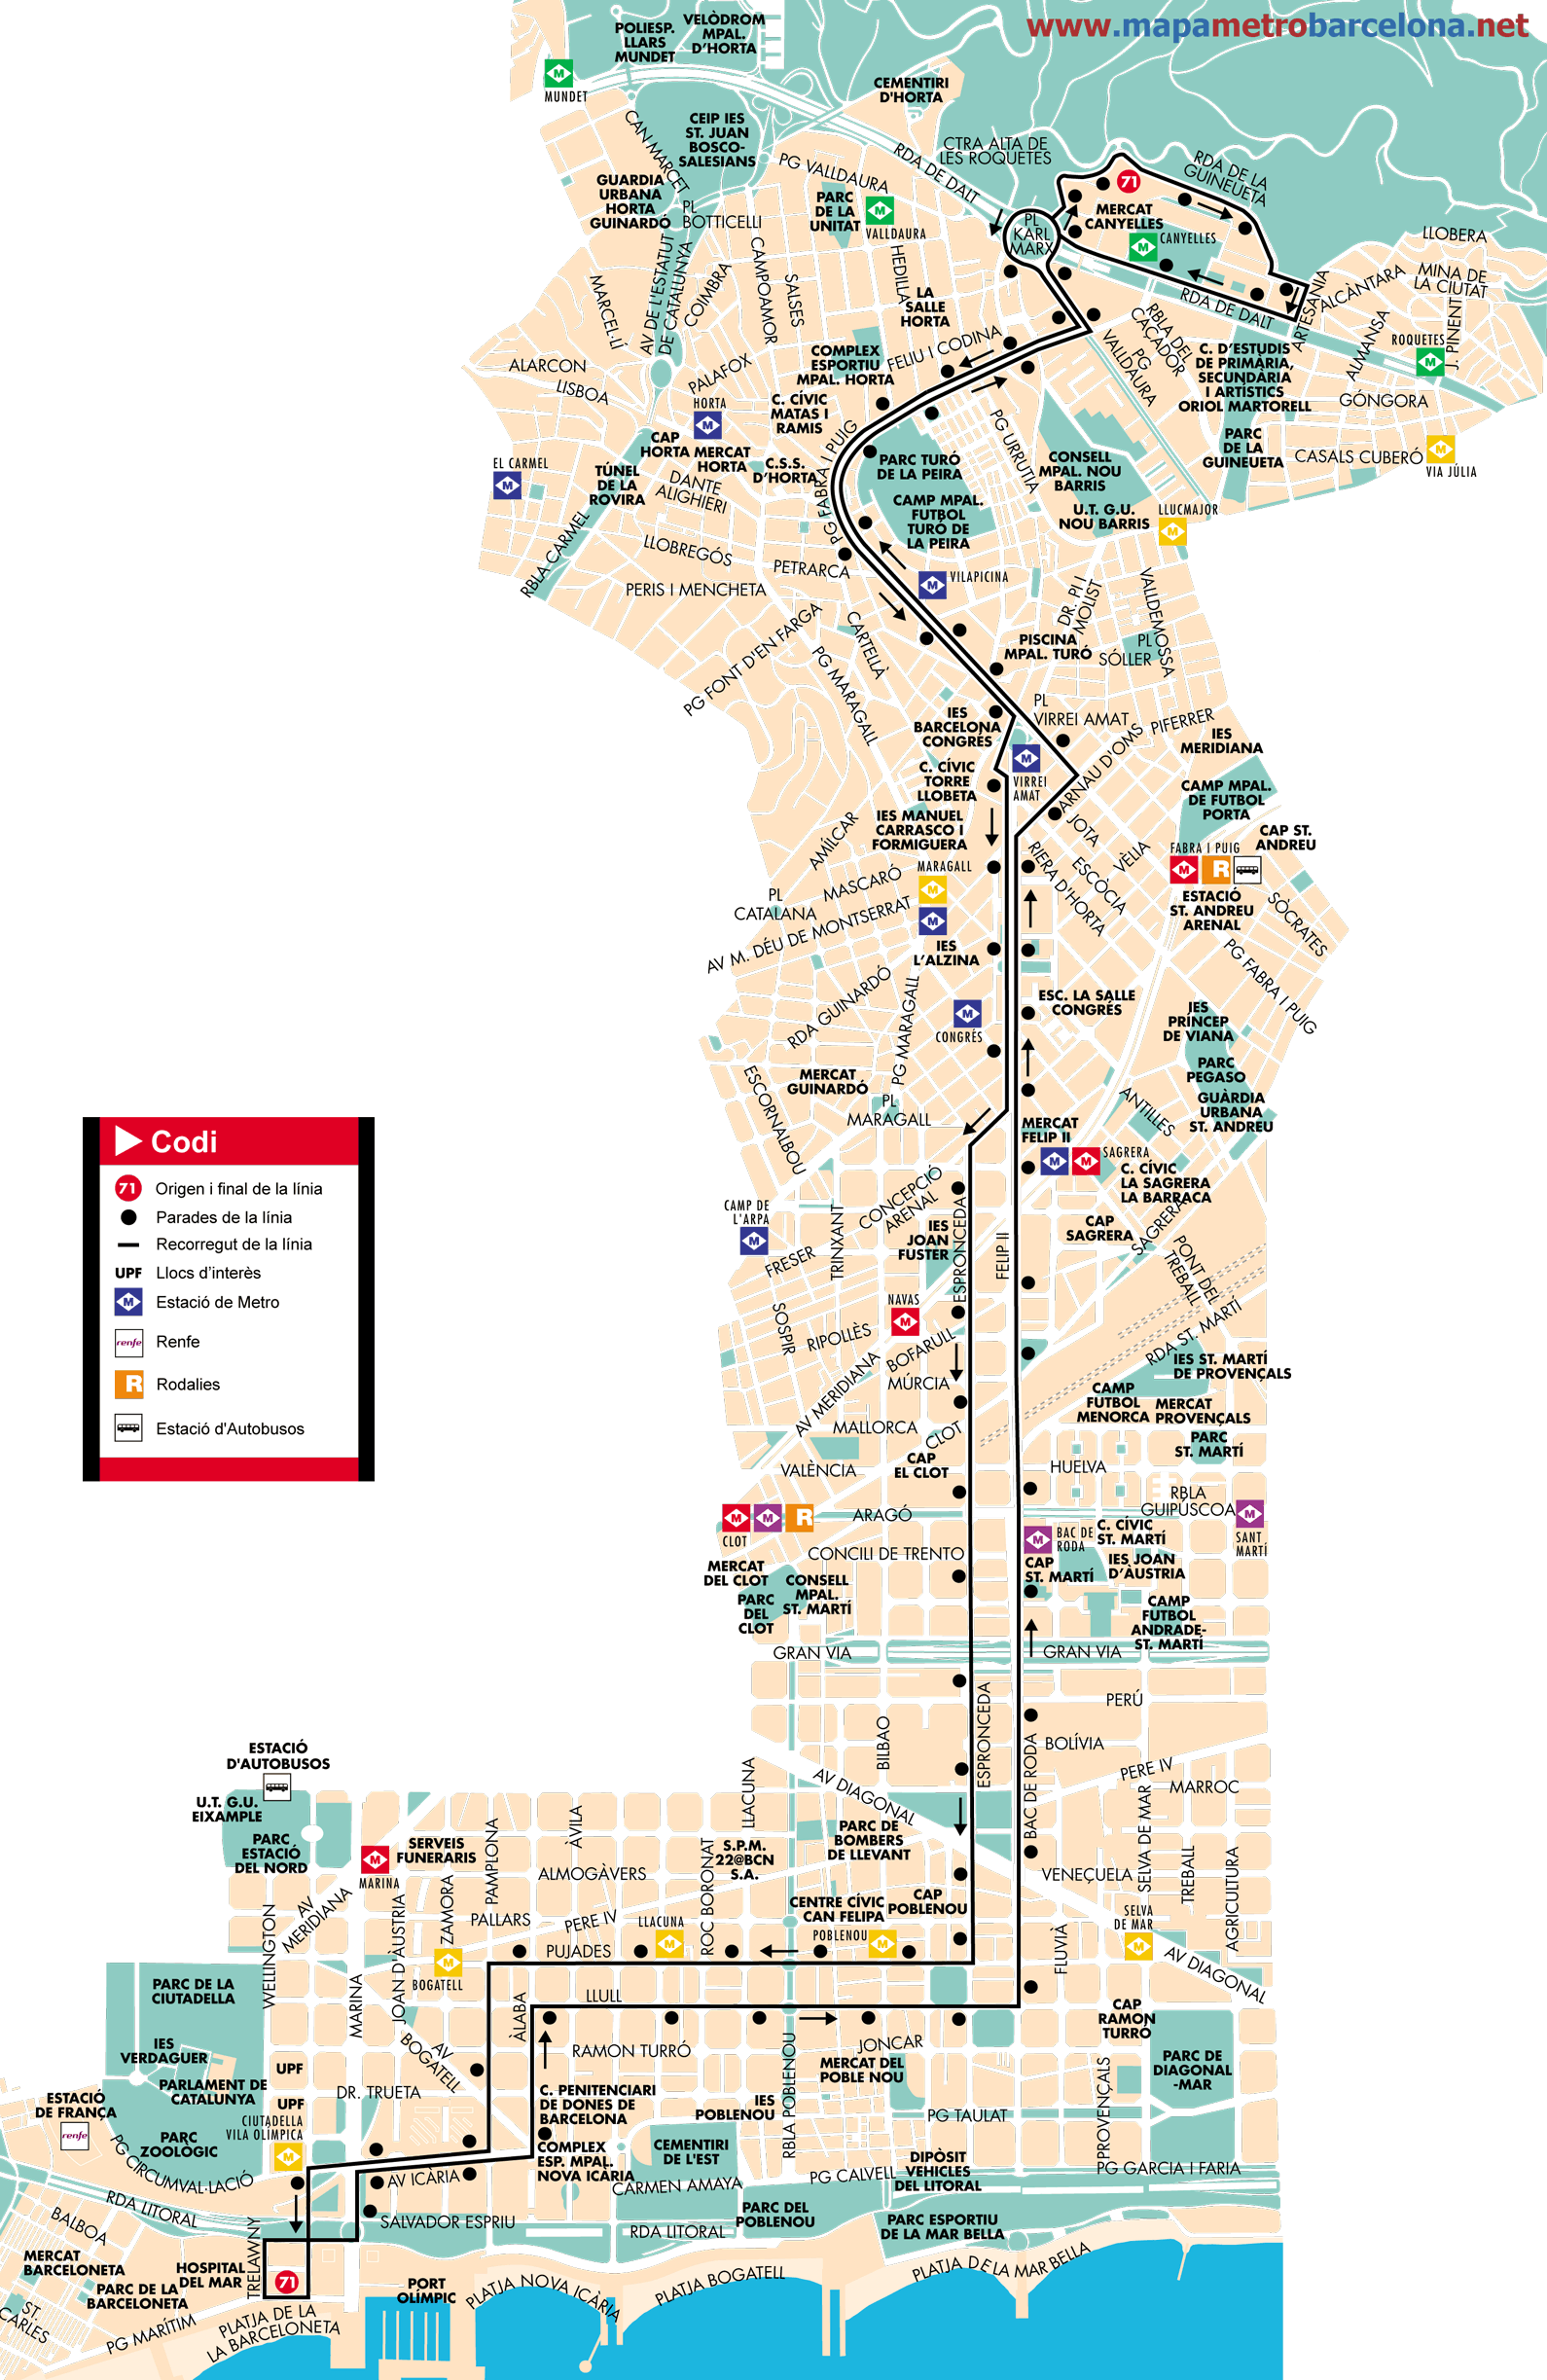 Barcelona bus map line 71